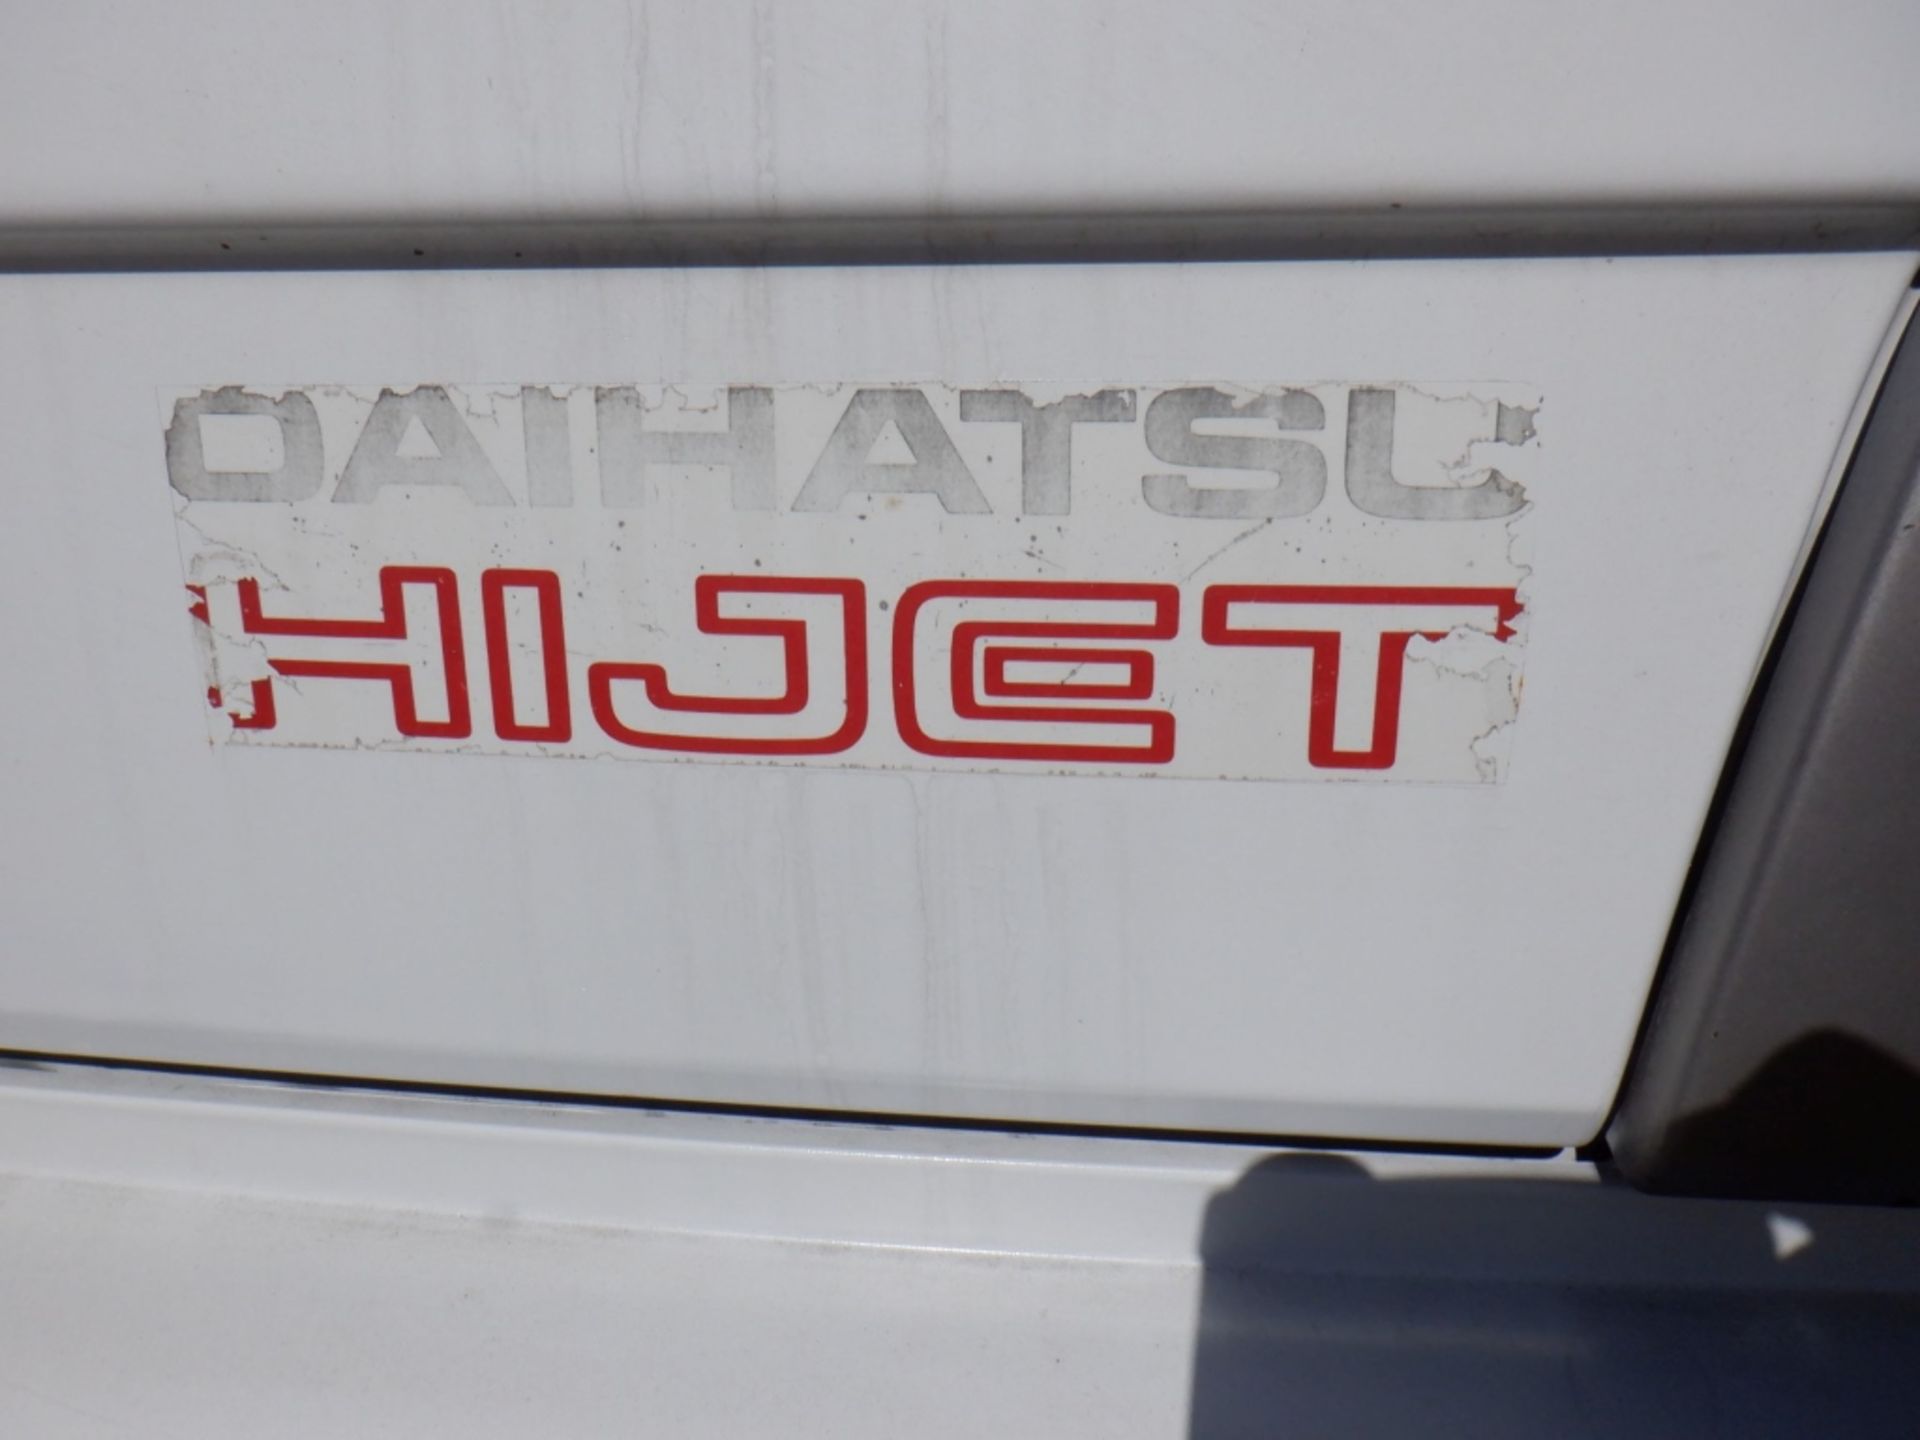 Daihatsu Hi-Jet Utility Vehicle, - Image 12 of 20